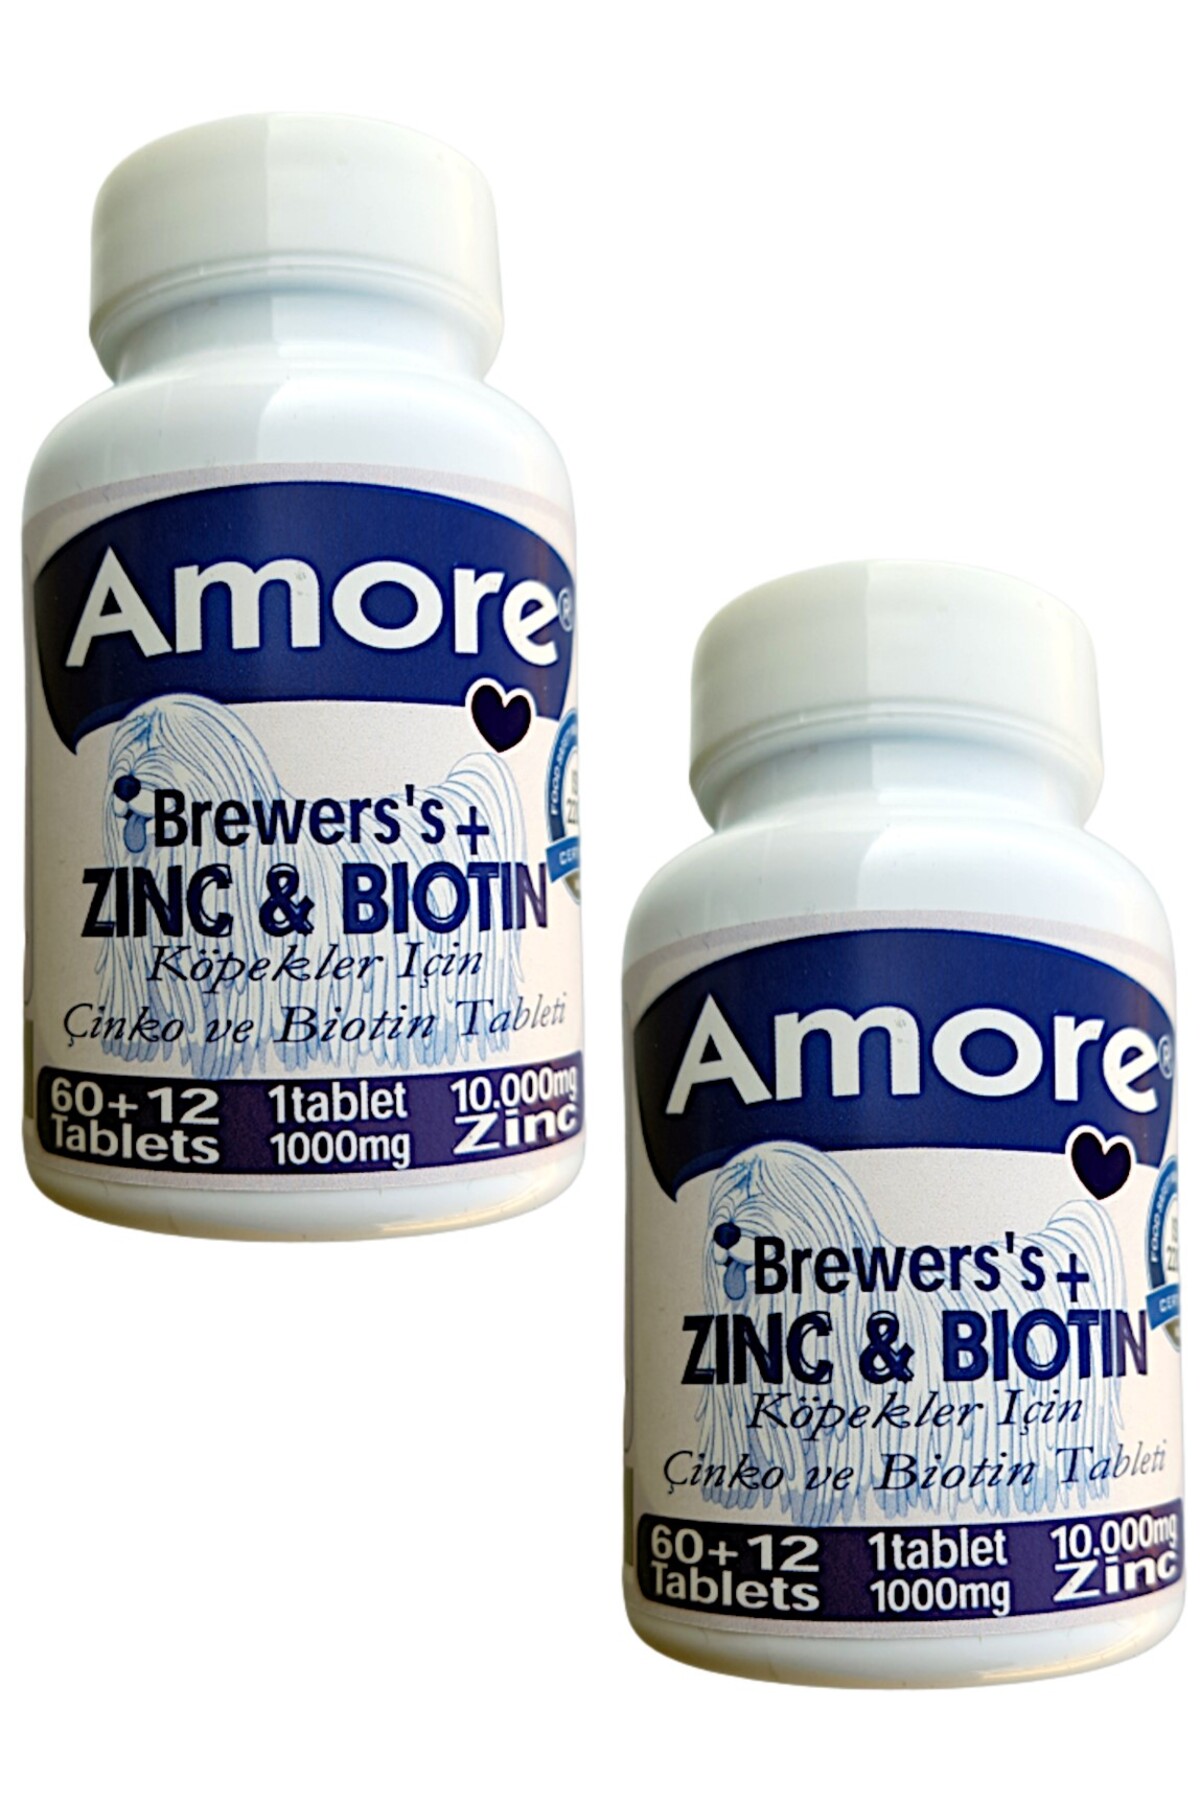 Amoredog Kopek Brewers 2 X 72li Cinko Biotin Tablet Tuy Dokum Xl Zinc Biotin Large Tabs